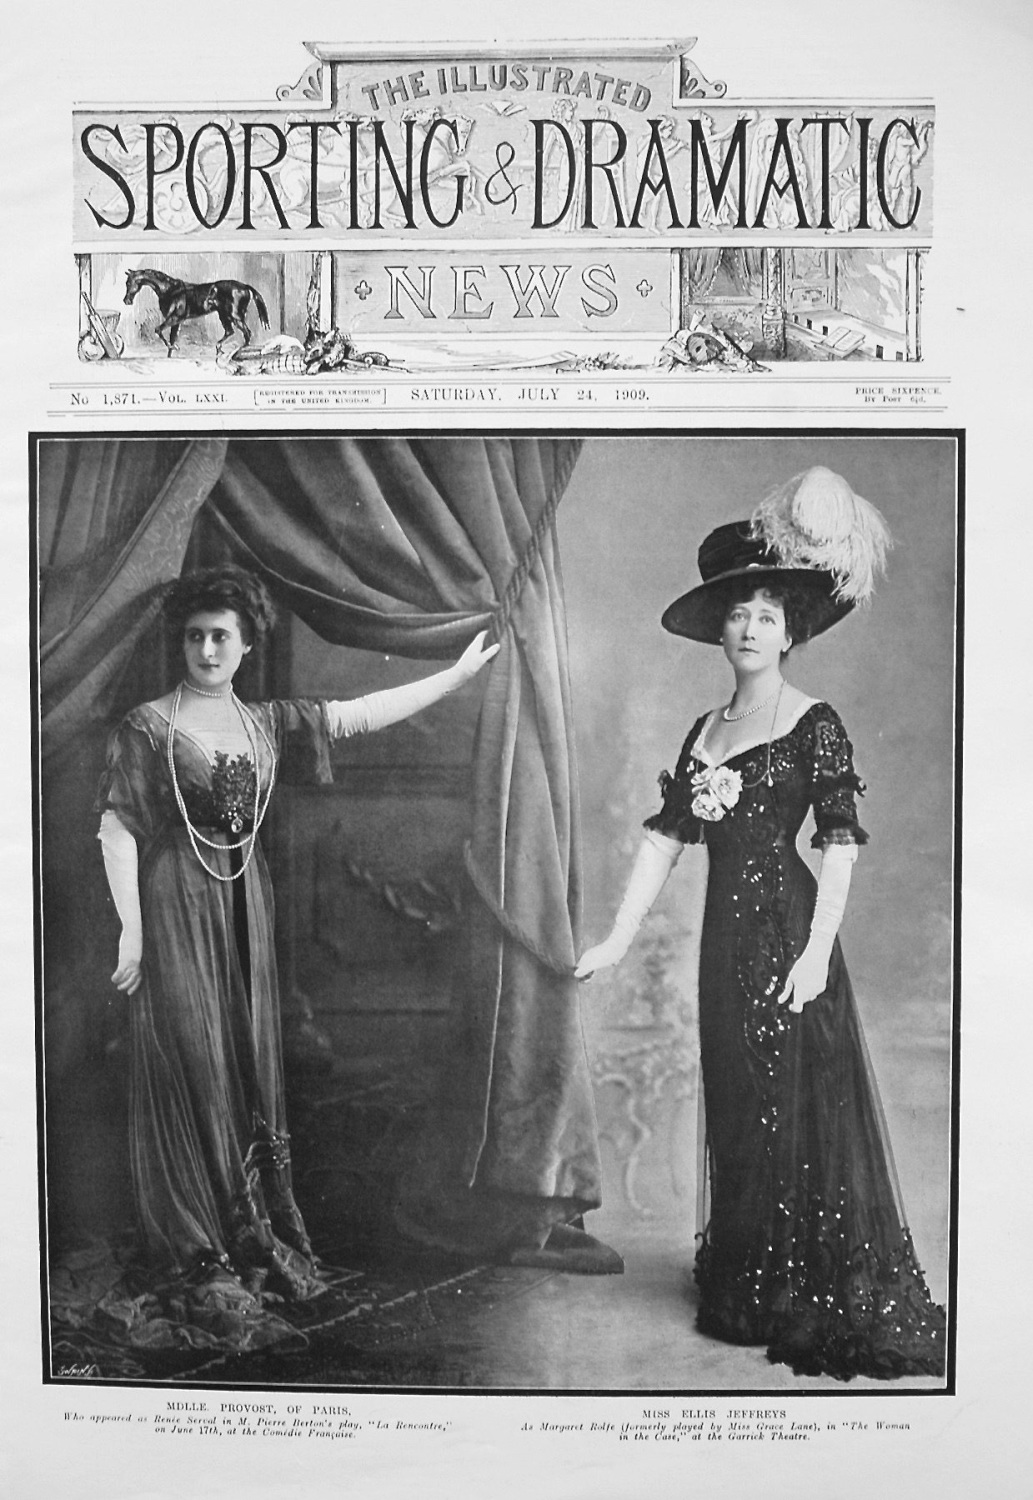 Mddle. Provost, of Paris, and Miss Ellis Jeffreys. 1909